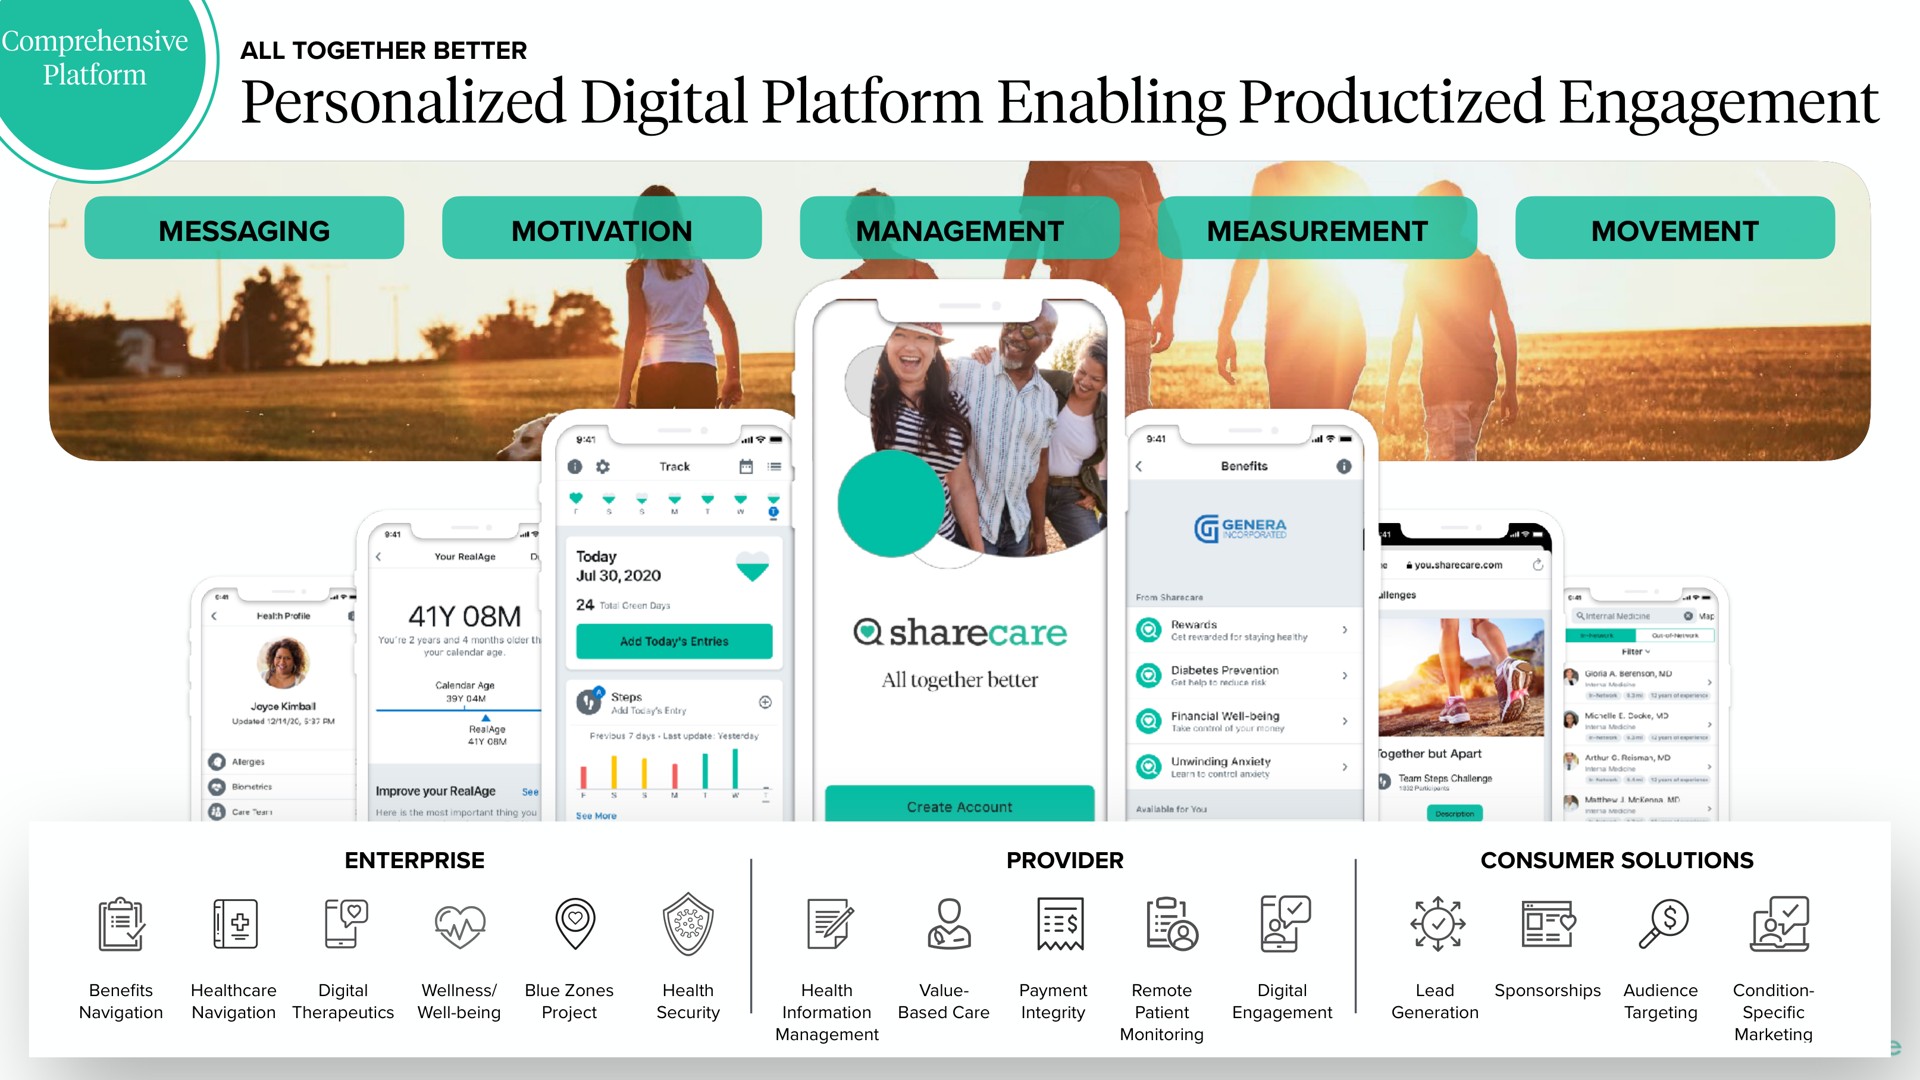 personalized digital platform enabling engagement | Sharecare